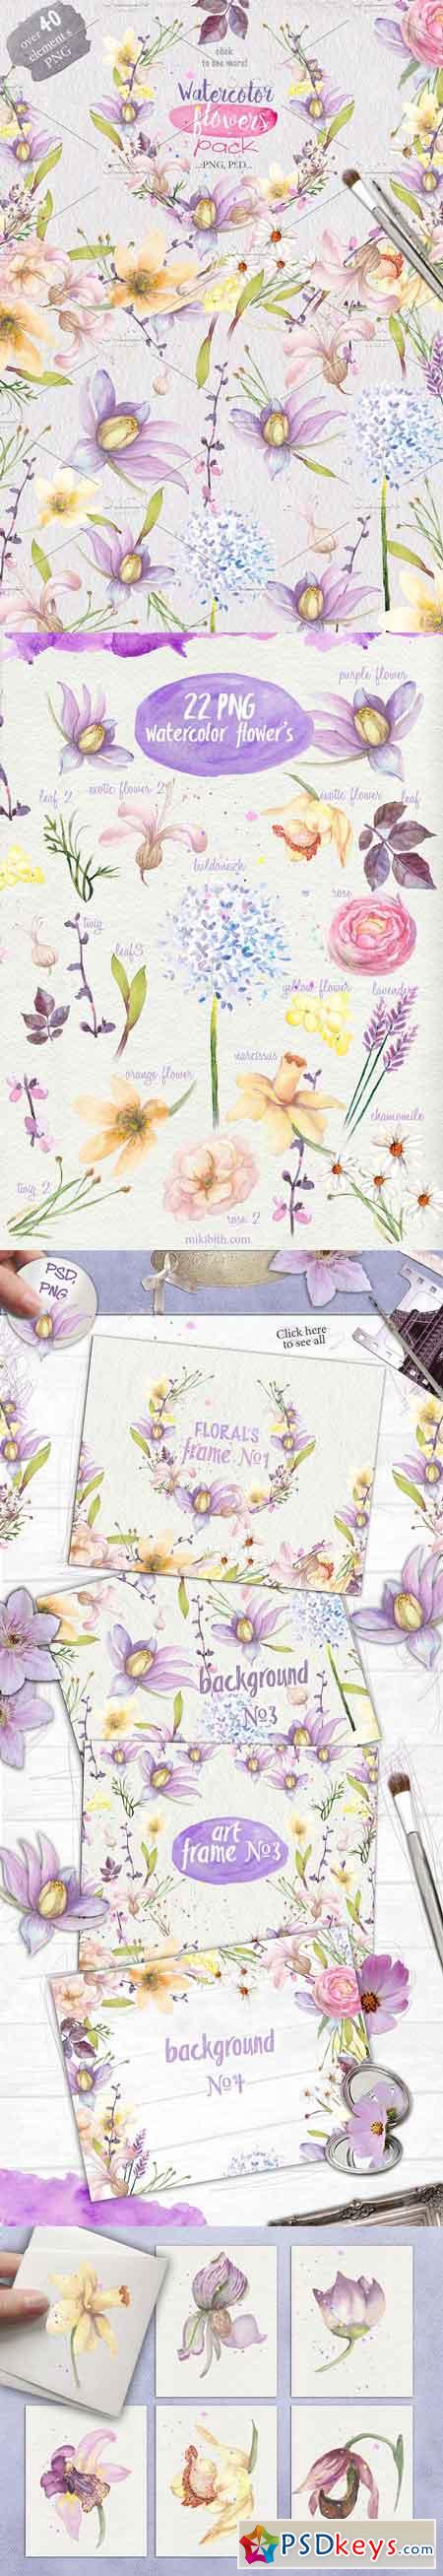 Watercolor flowers 437160